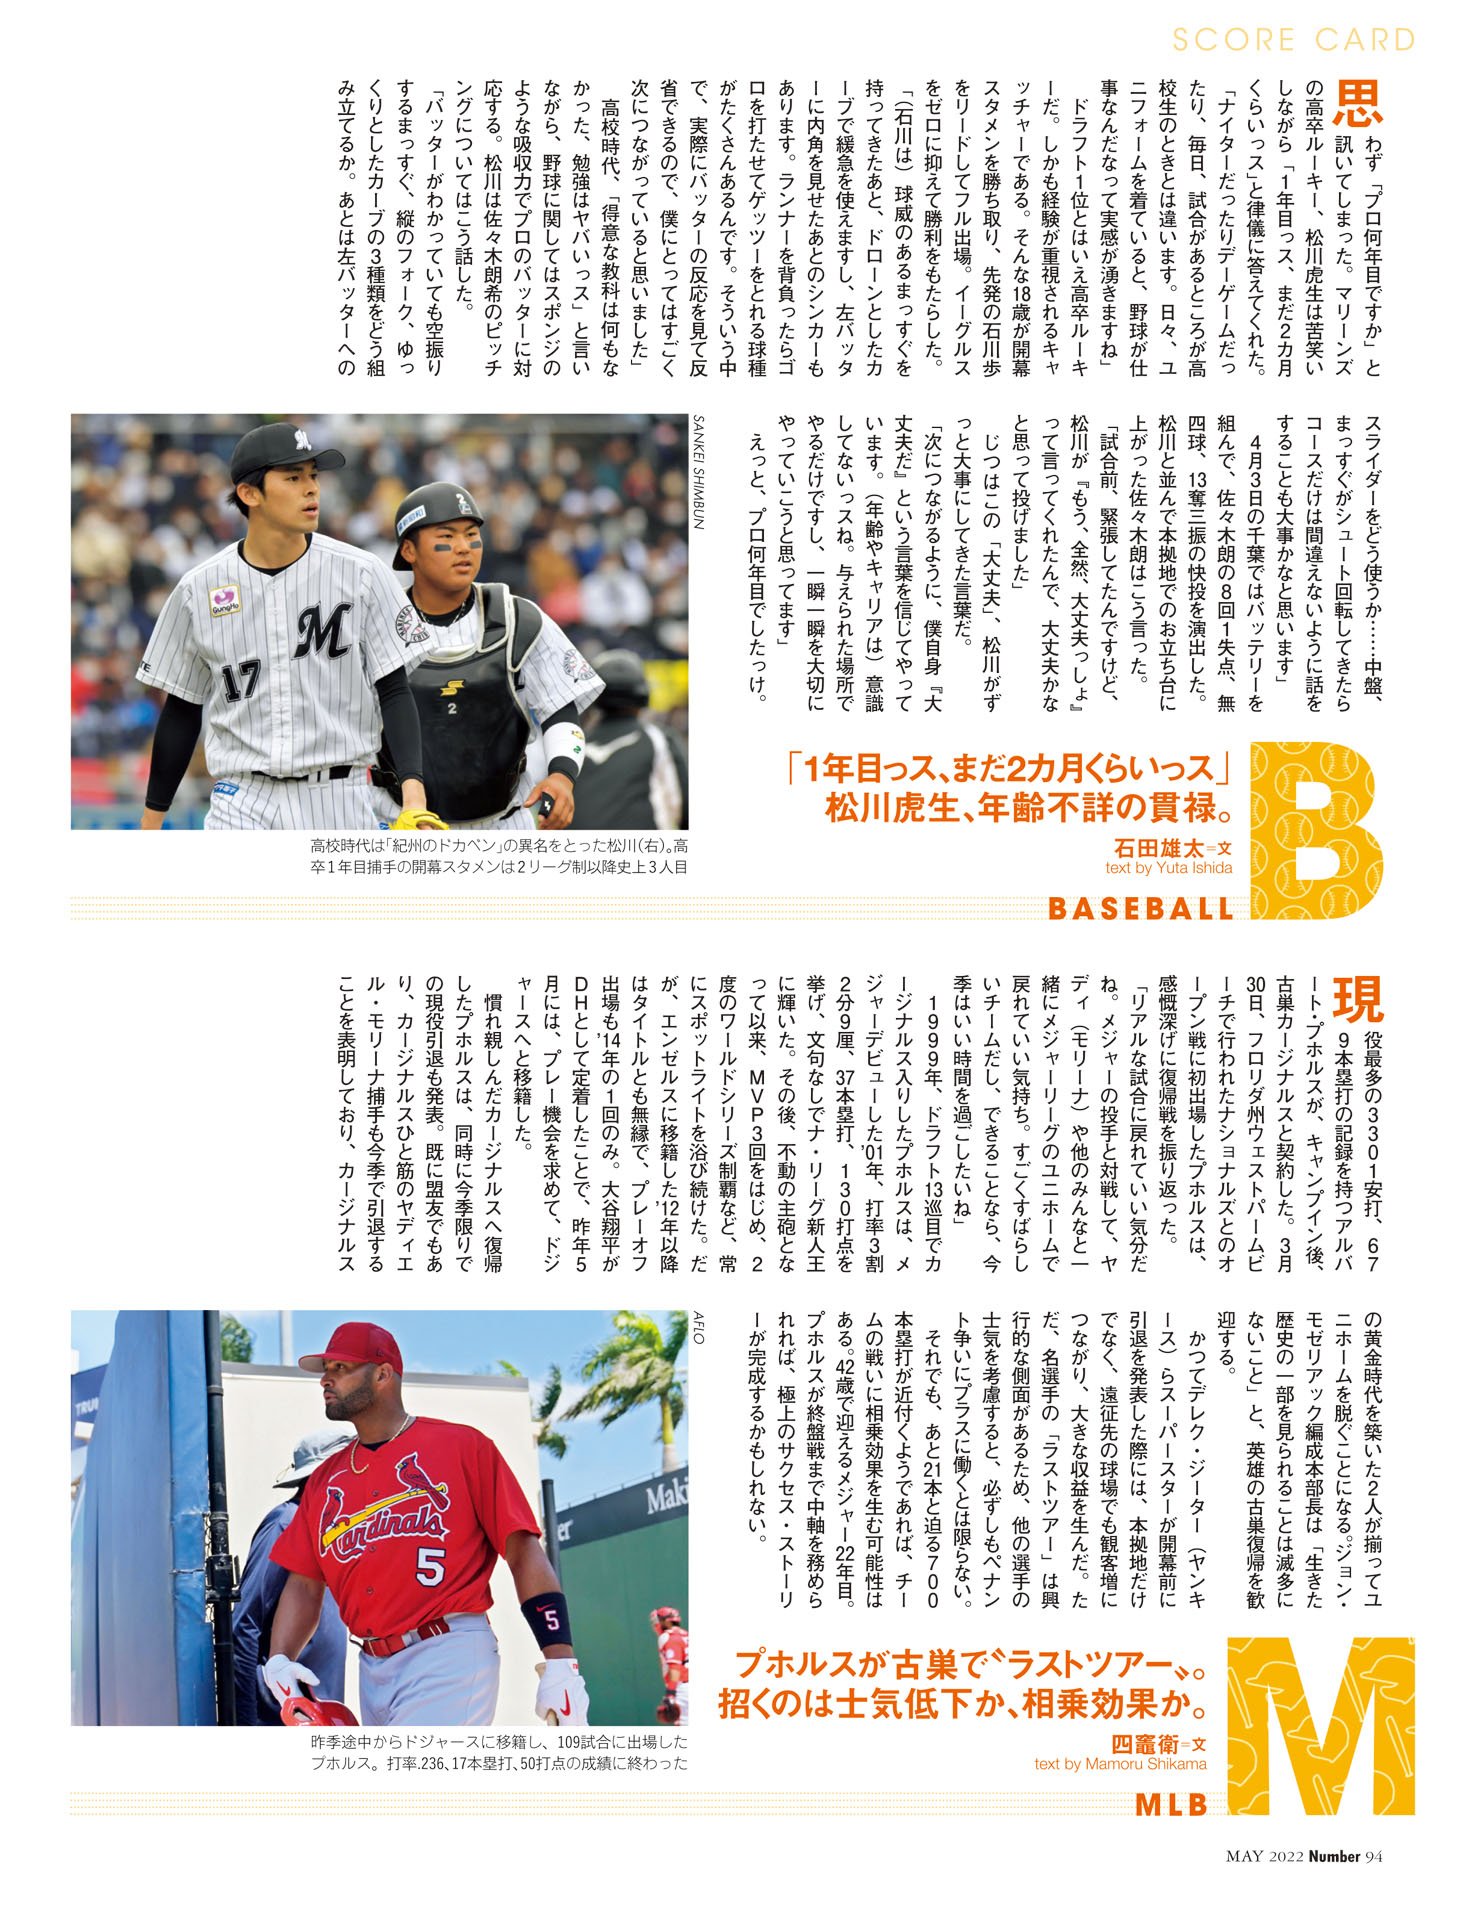 【SCORE CARD】BASEBALL／MLB